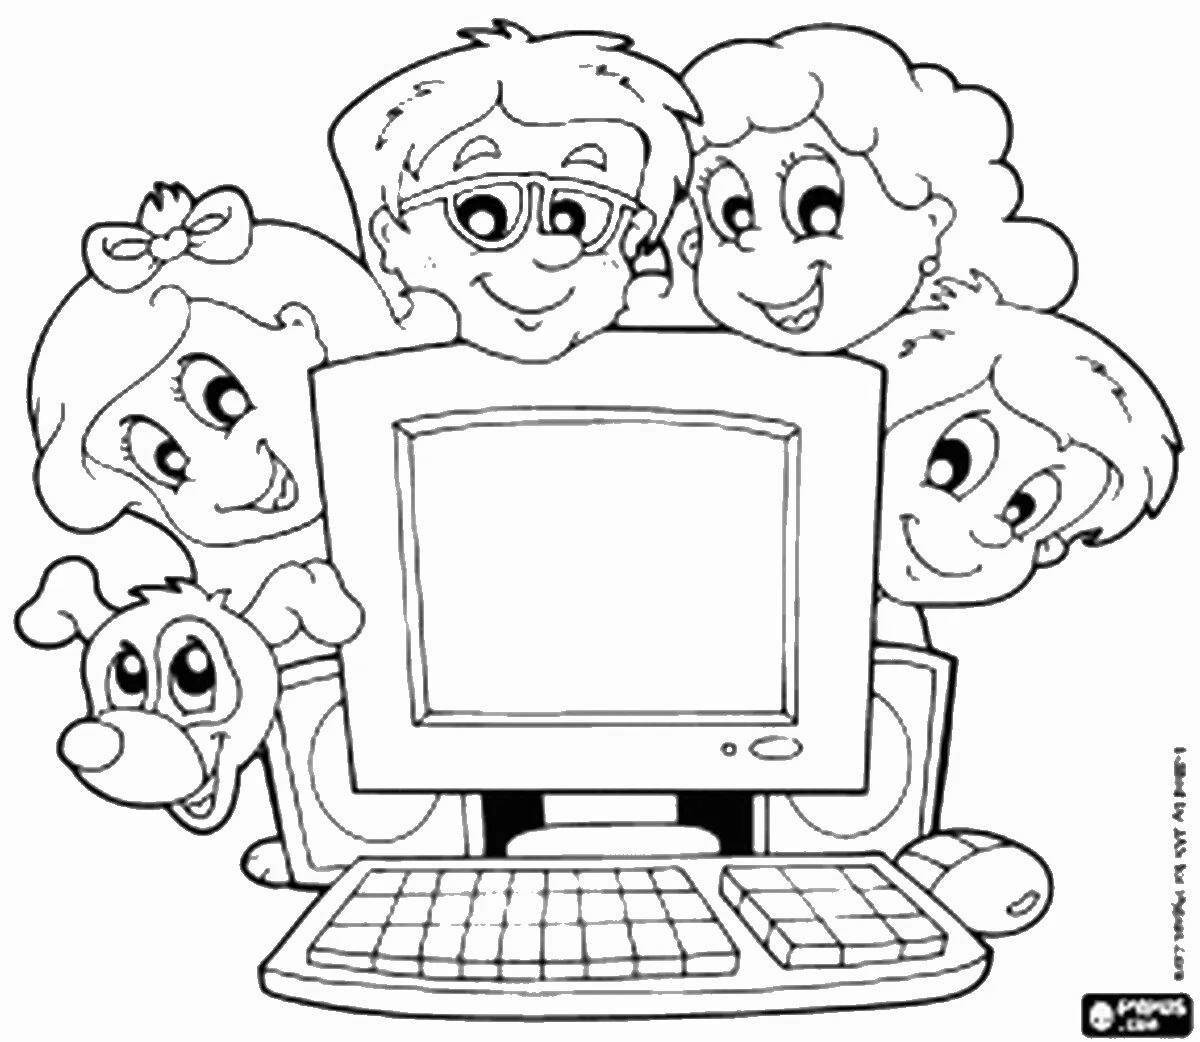 Colorful safe internet page for schoolchildren